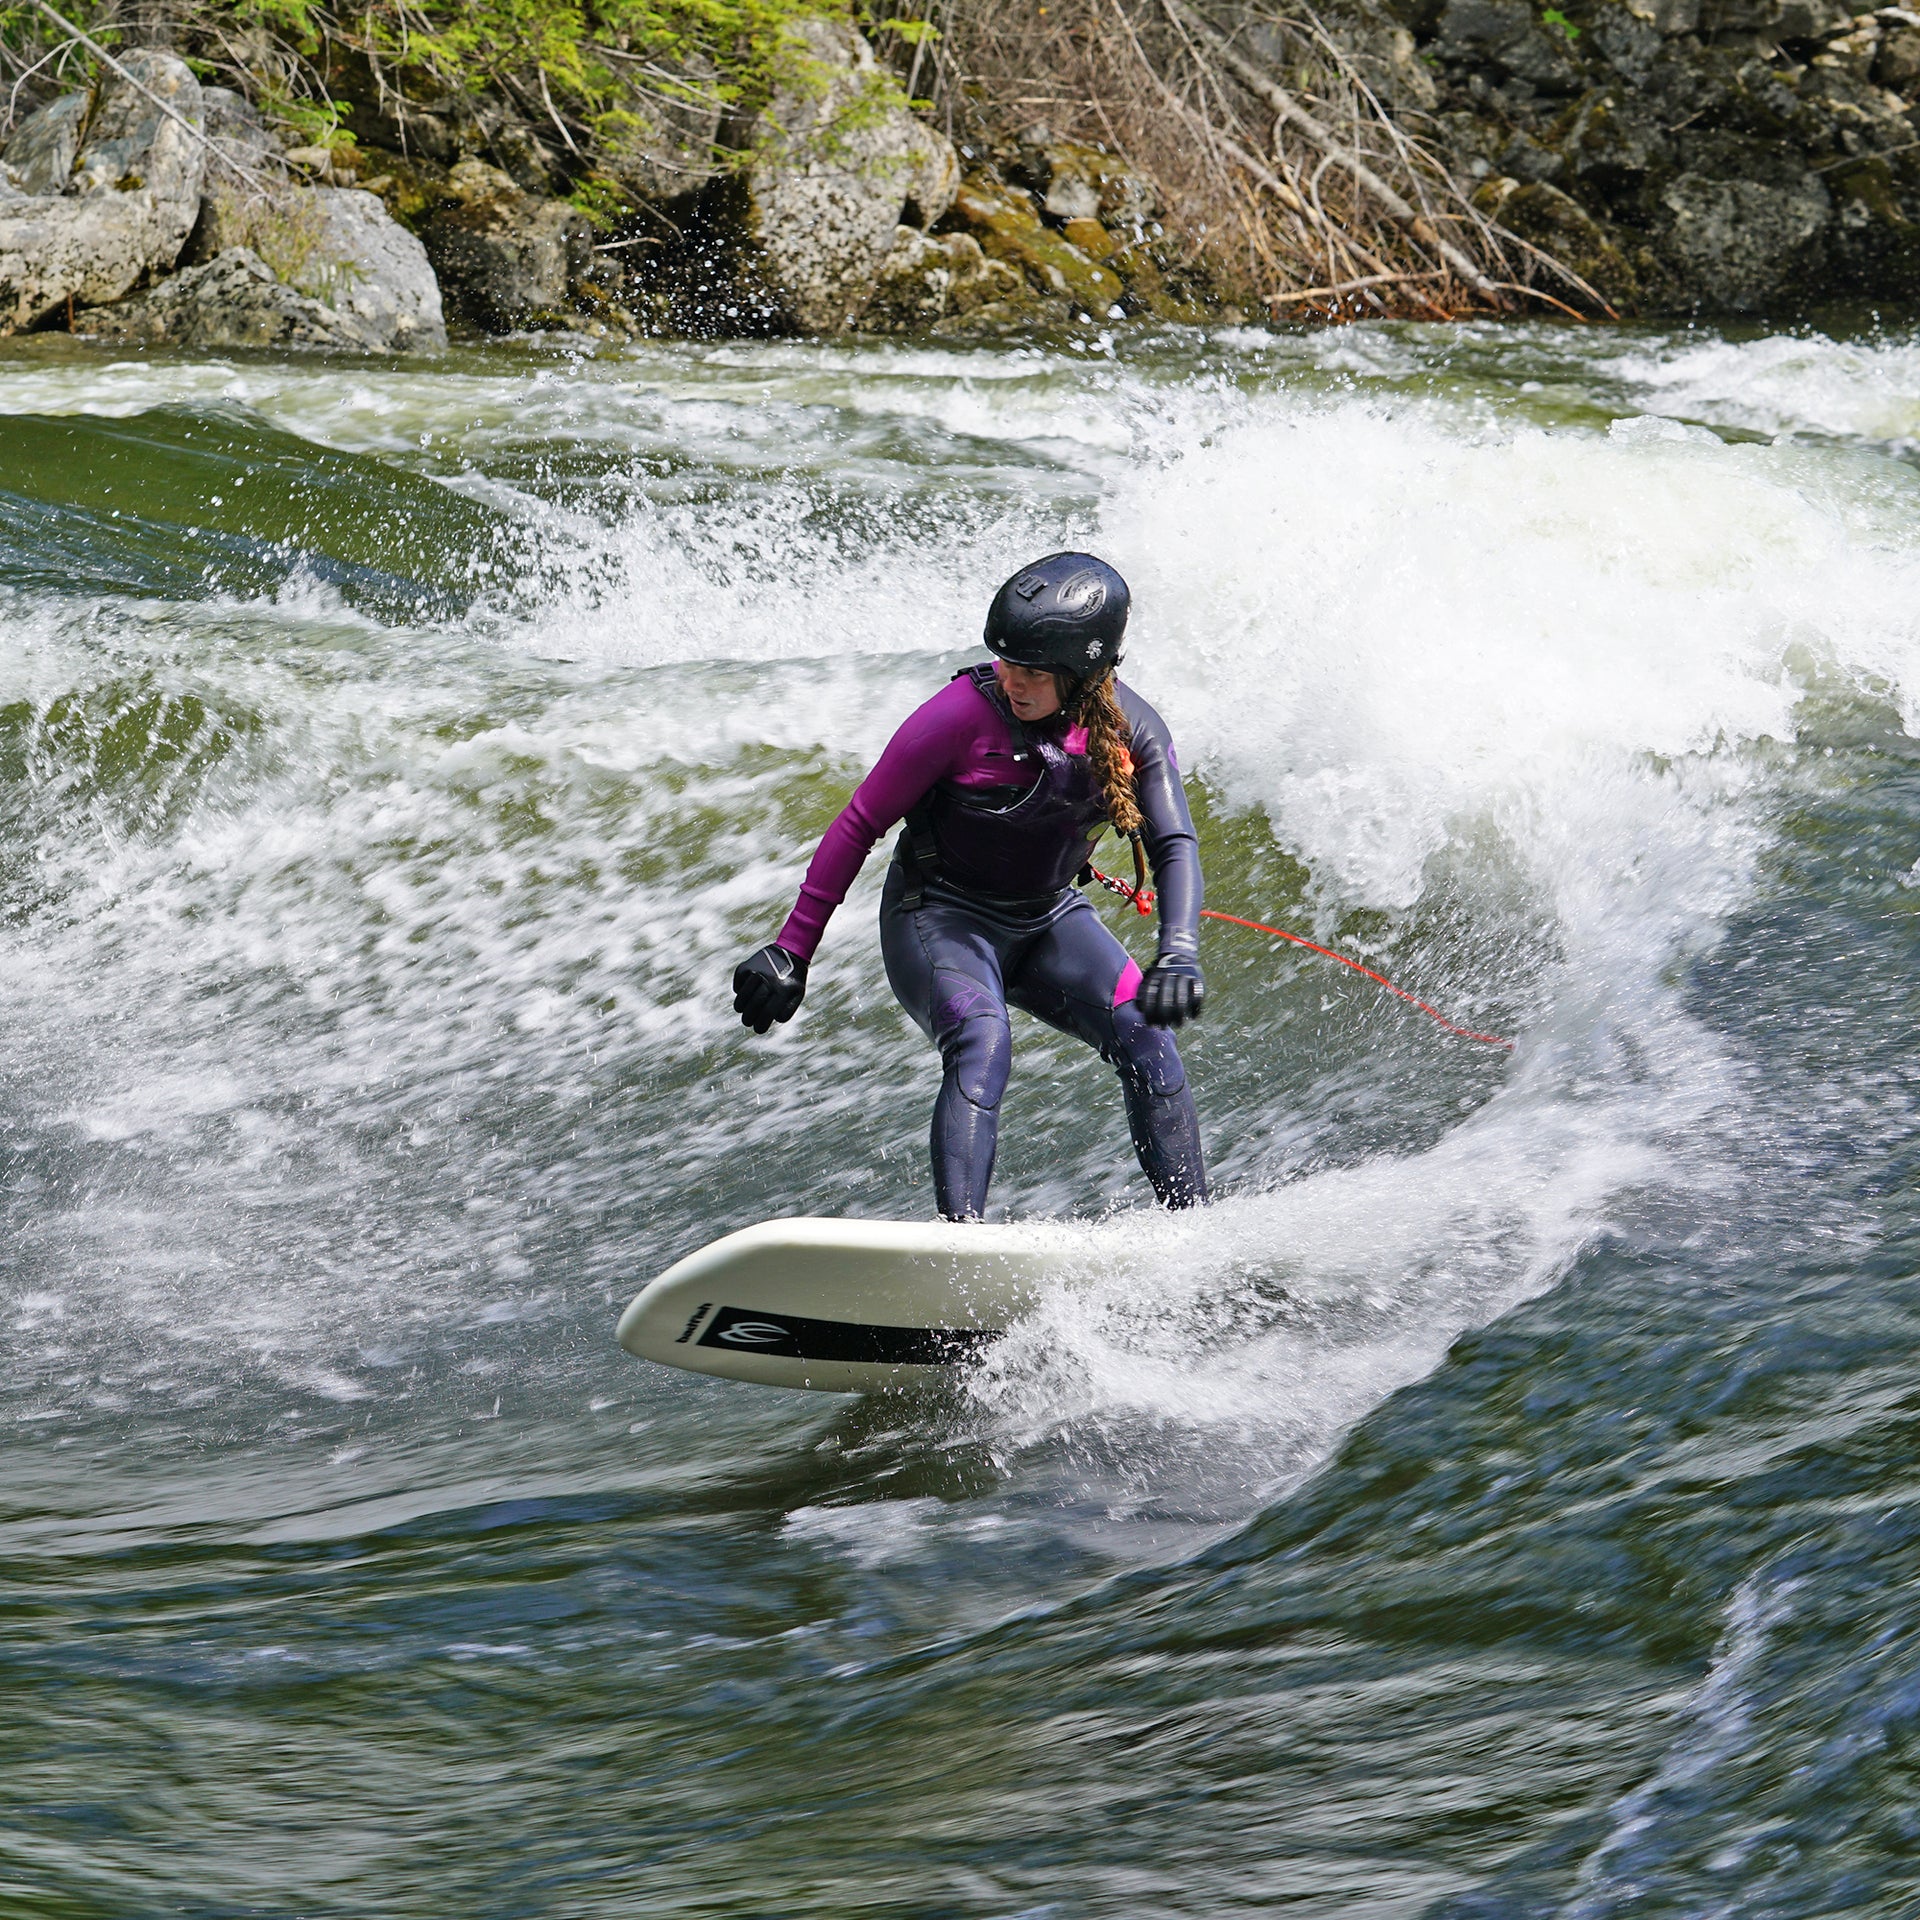 Badfish River Surfboard Category